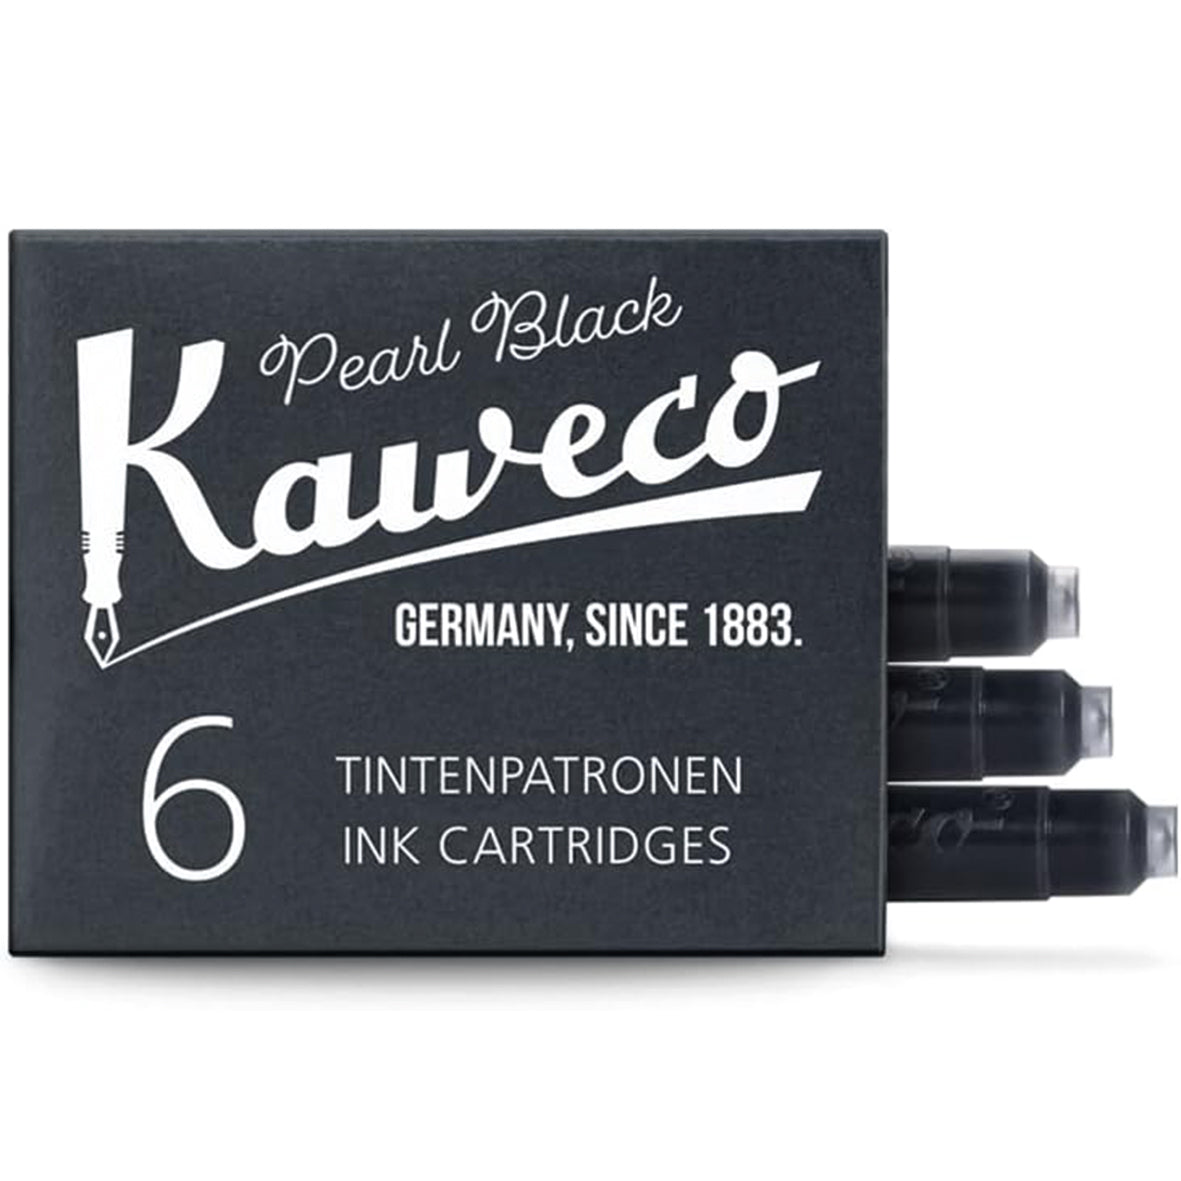 Tintenpatronen Kaweco Pearl Black, 6 Stück